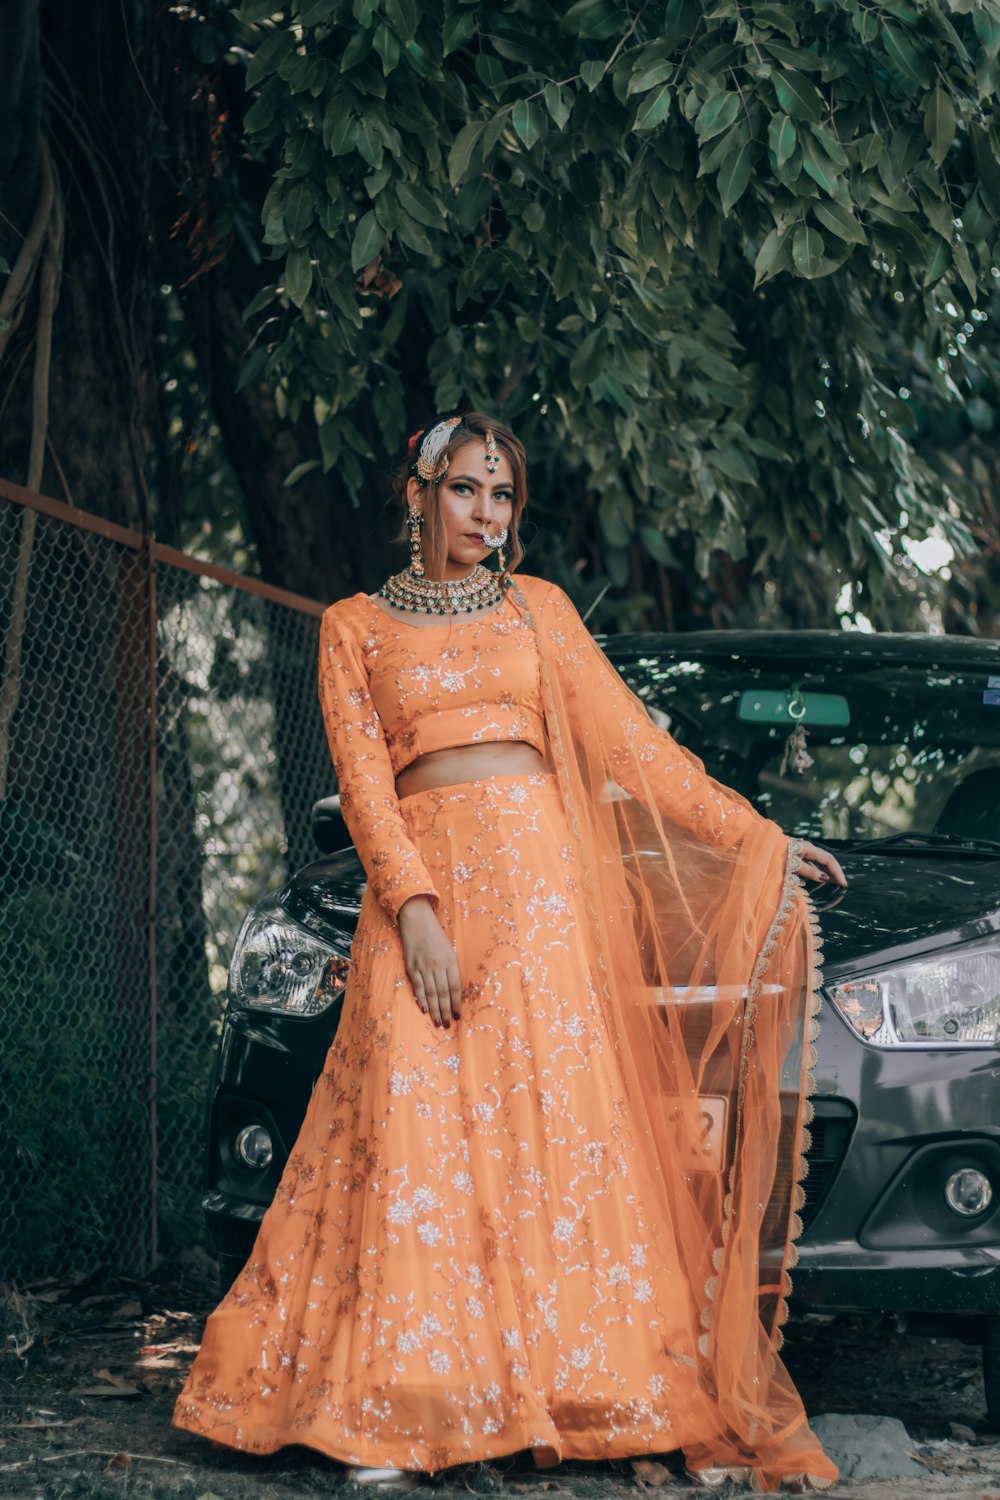 woman in orange dress standing beside black car